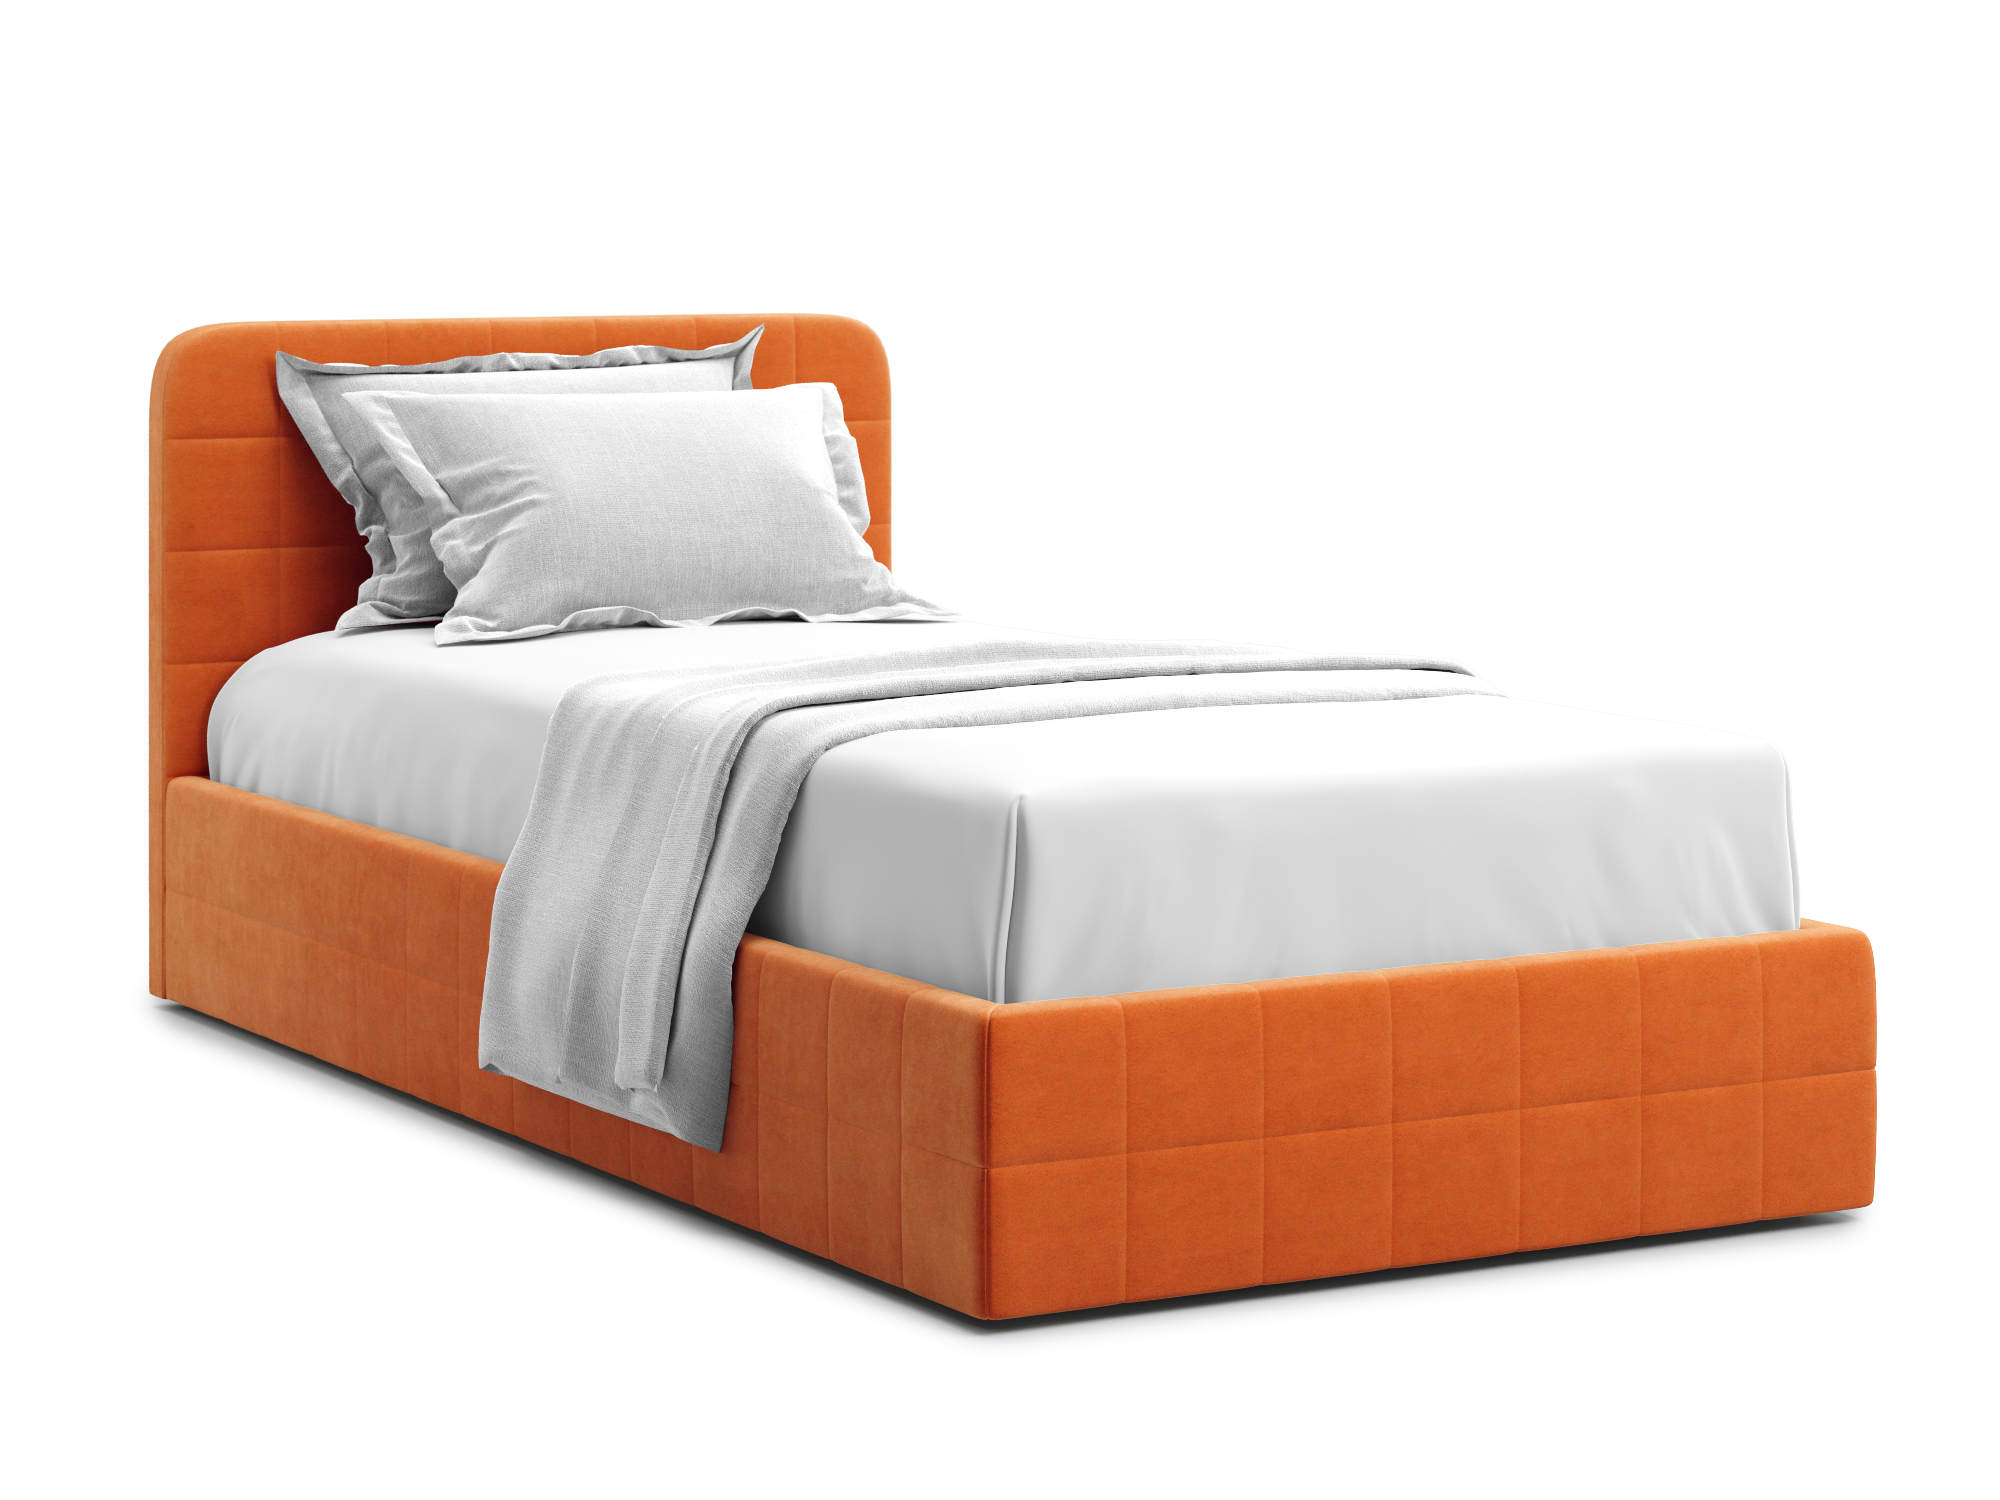 Кровать Adda 120 Velutto 27 Оранжевый, Массив, ДСП кровать adda 120 velutto 23 шоколадный массив дсп